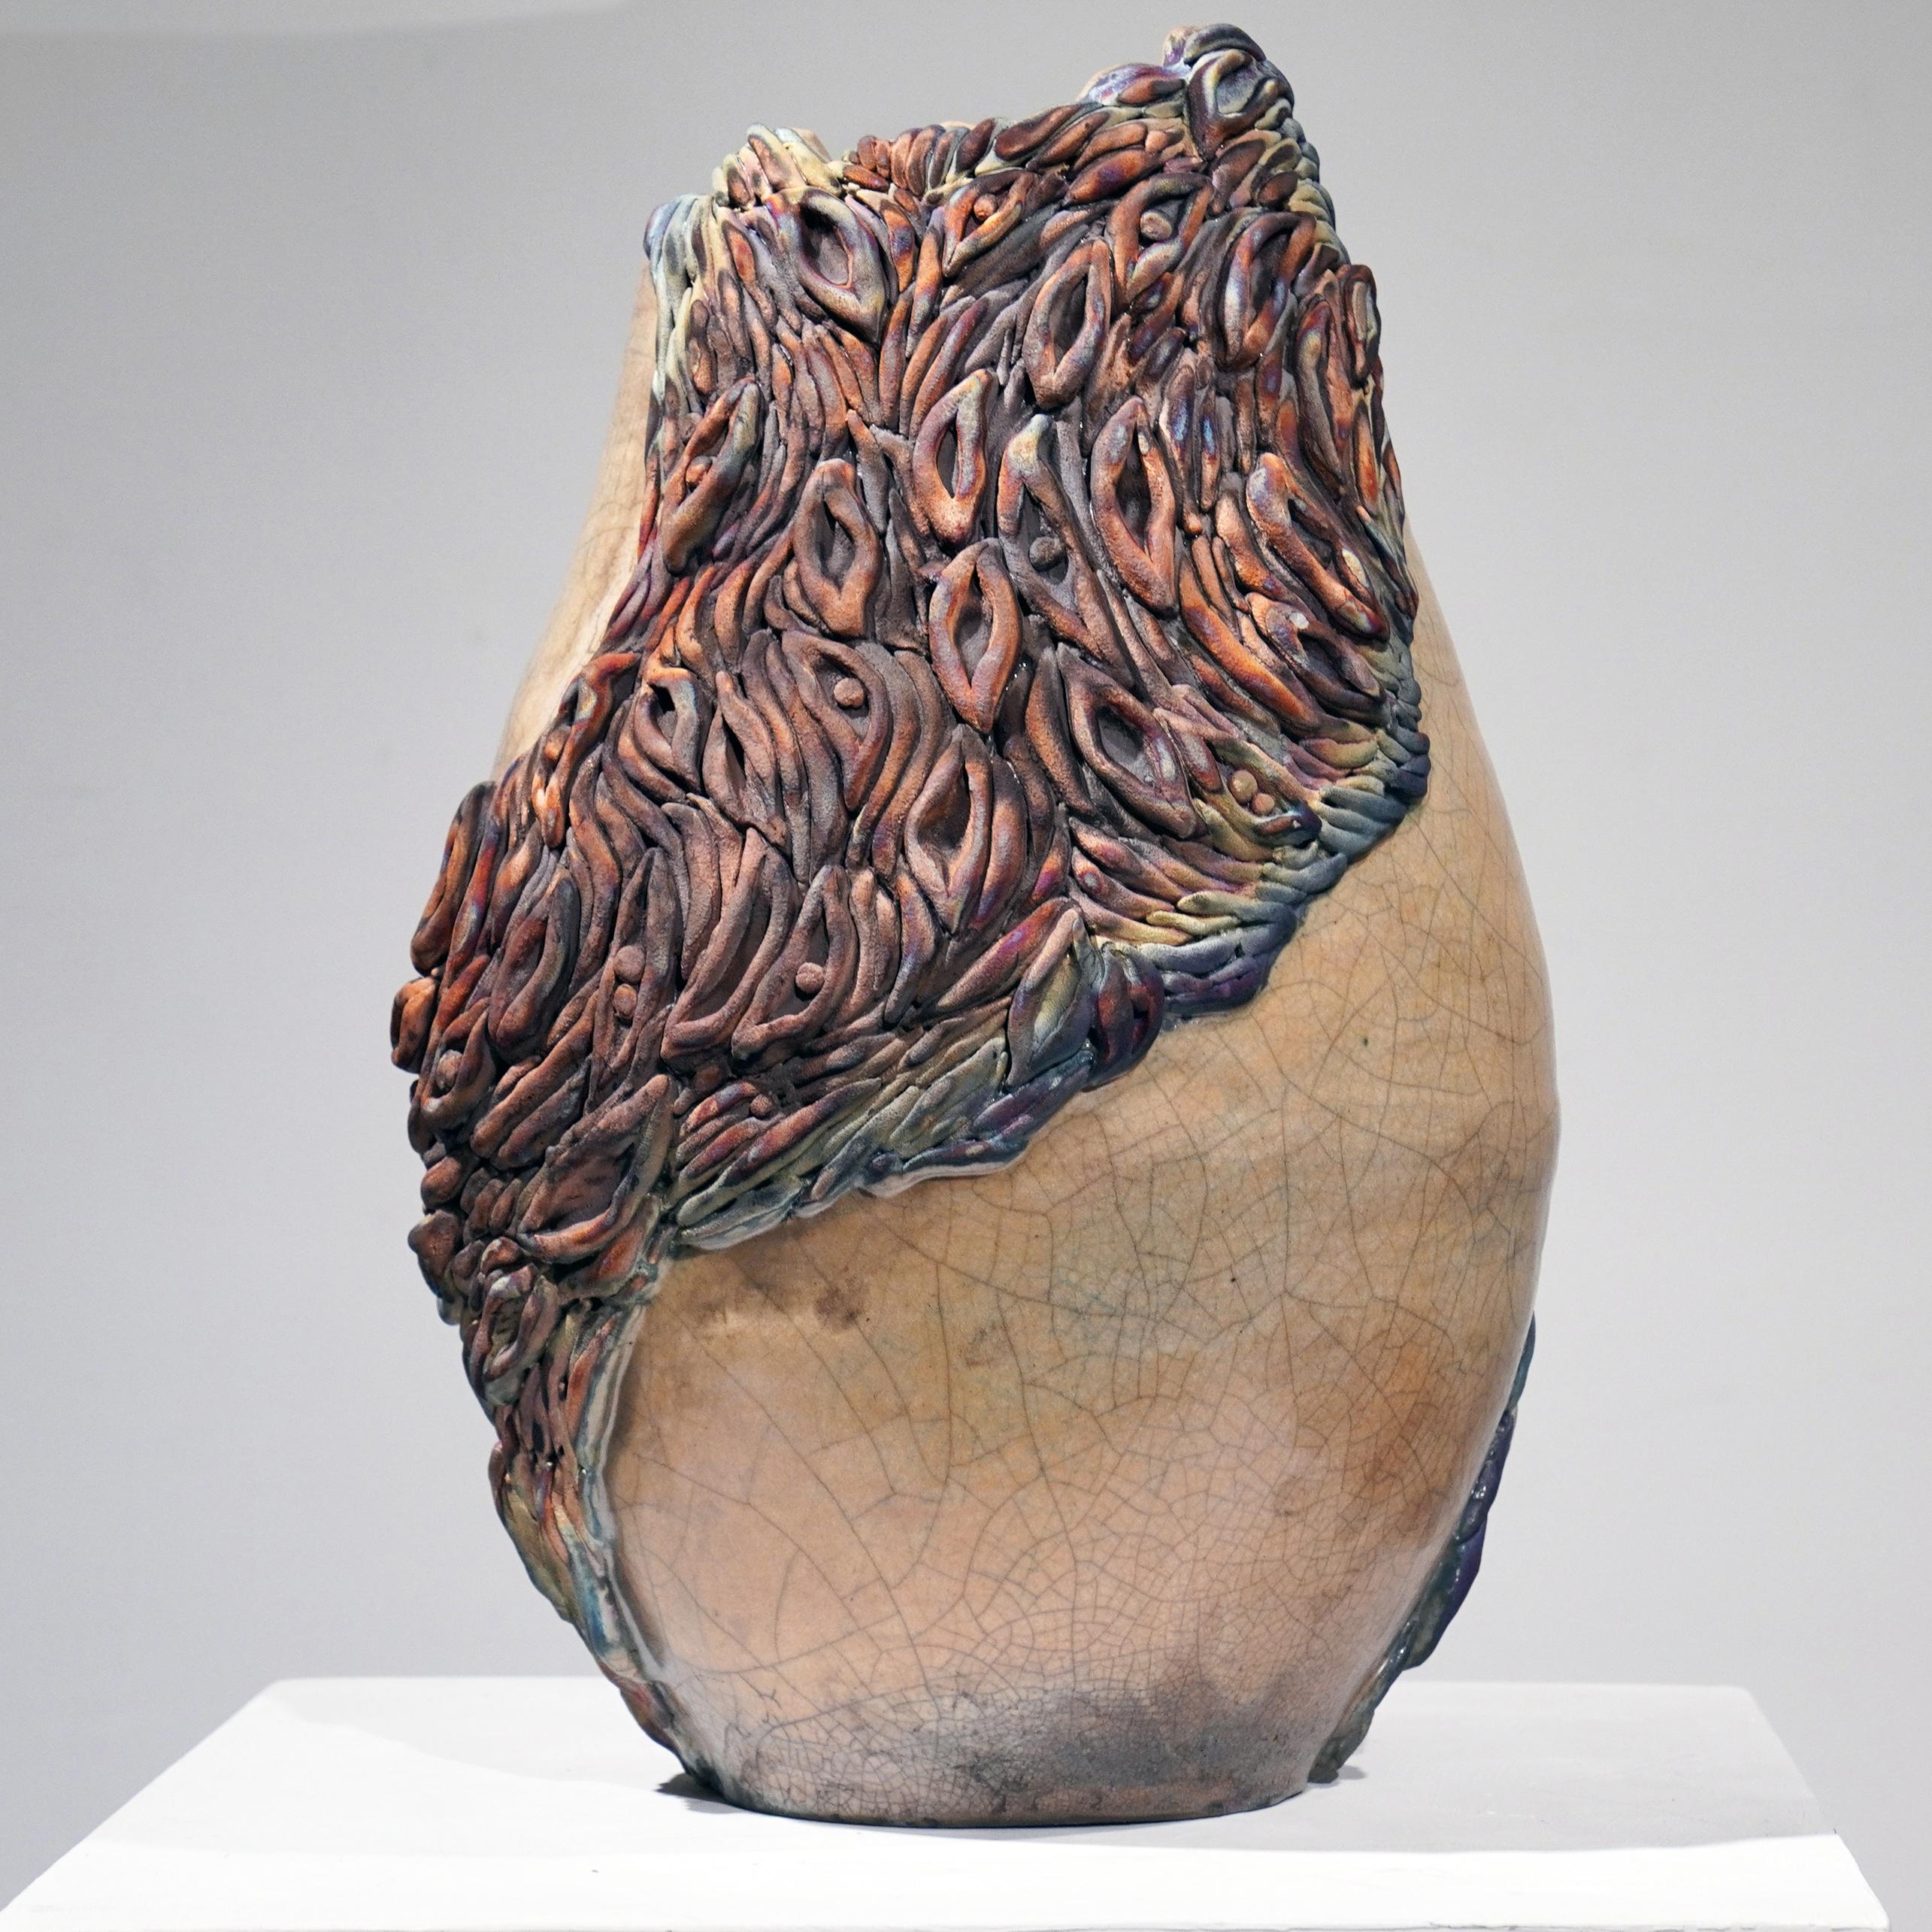 Malaysian Human - life magnified collection raku ceramic pottery sculpture by Adil Ghani